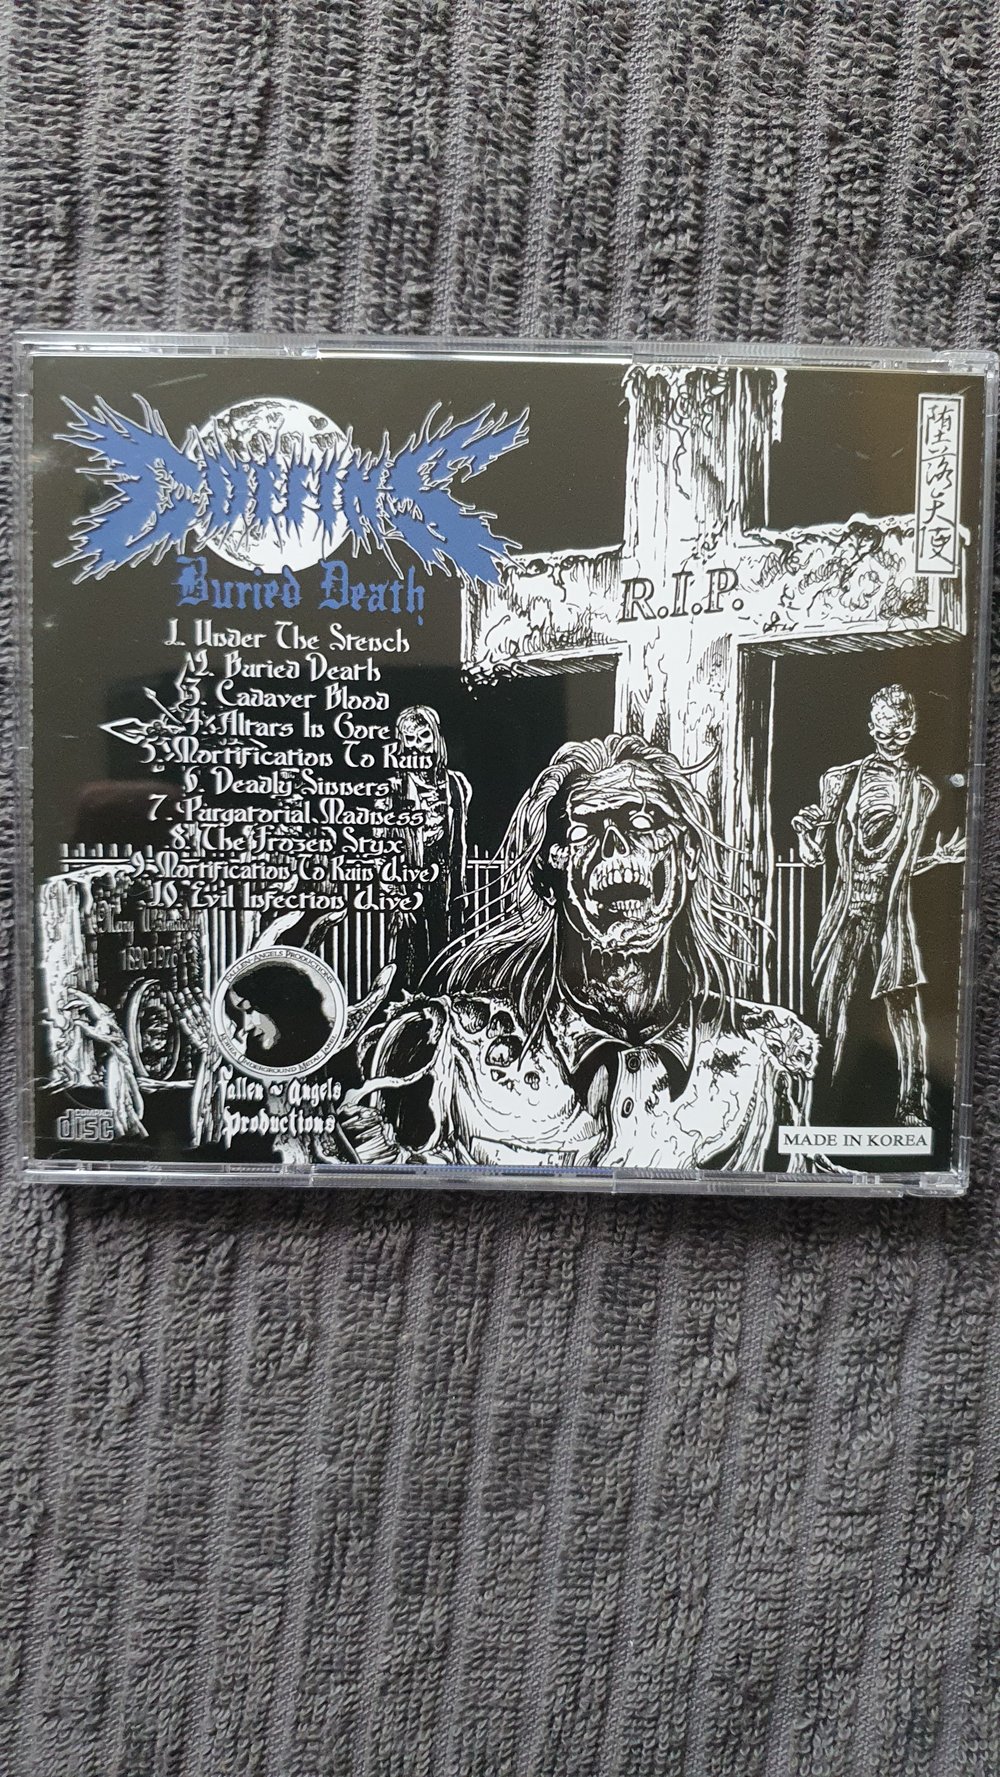 COFFINS - BURIED DEATH CD